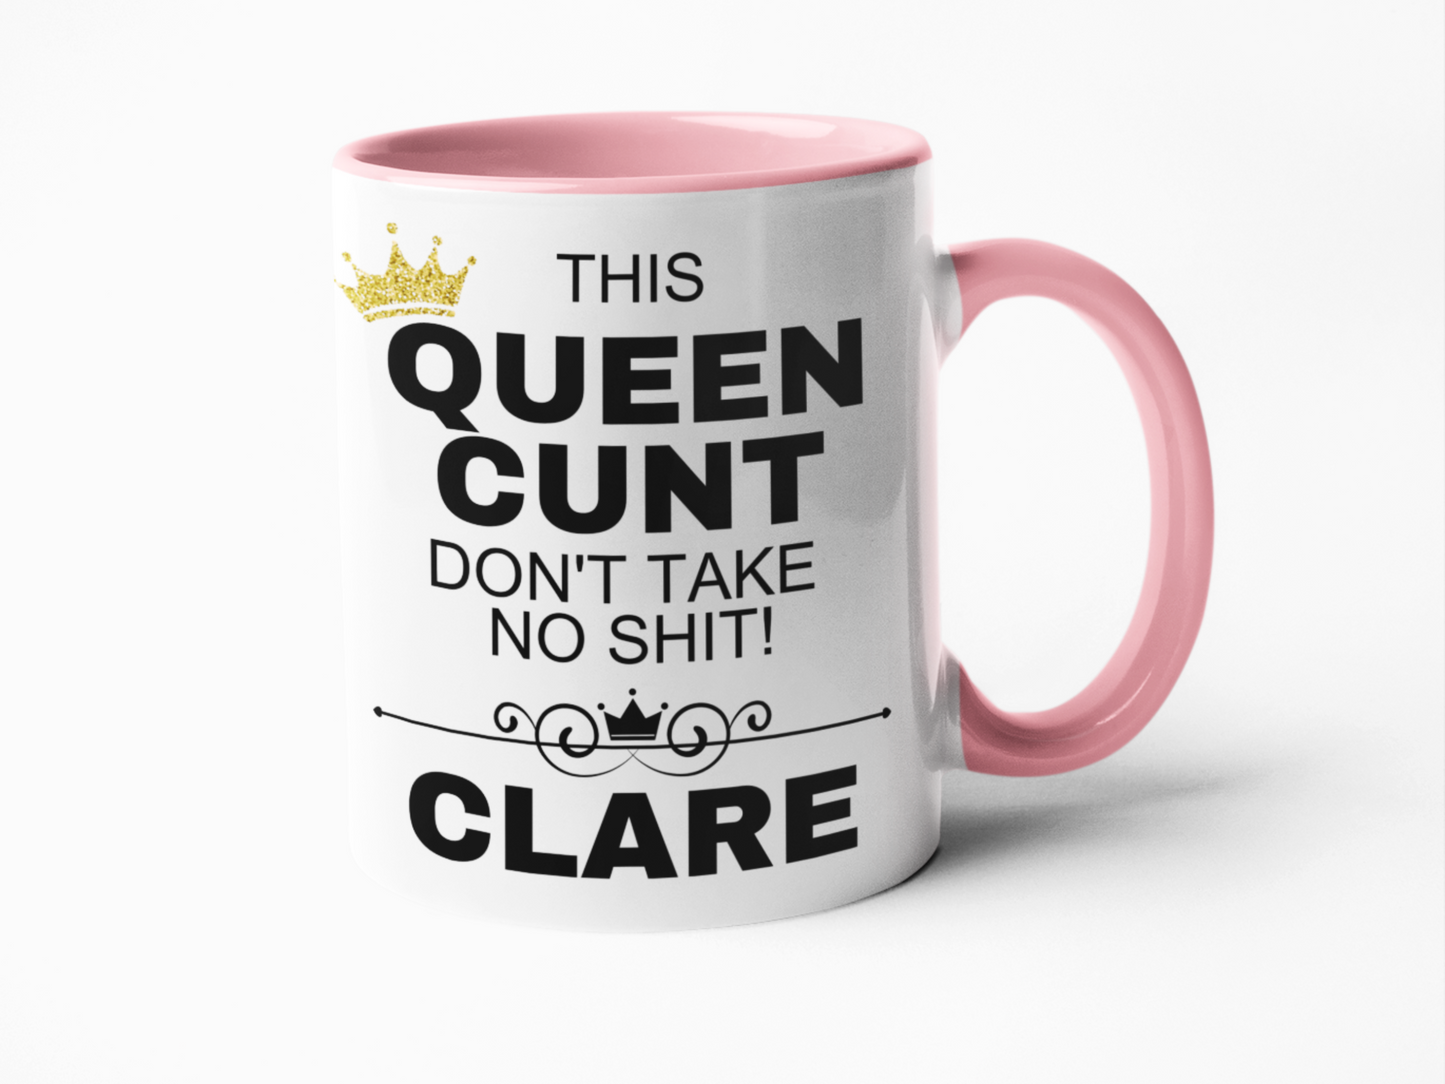 Queen cunt funny coffee mug